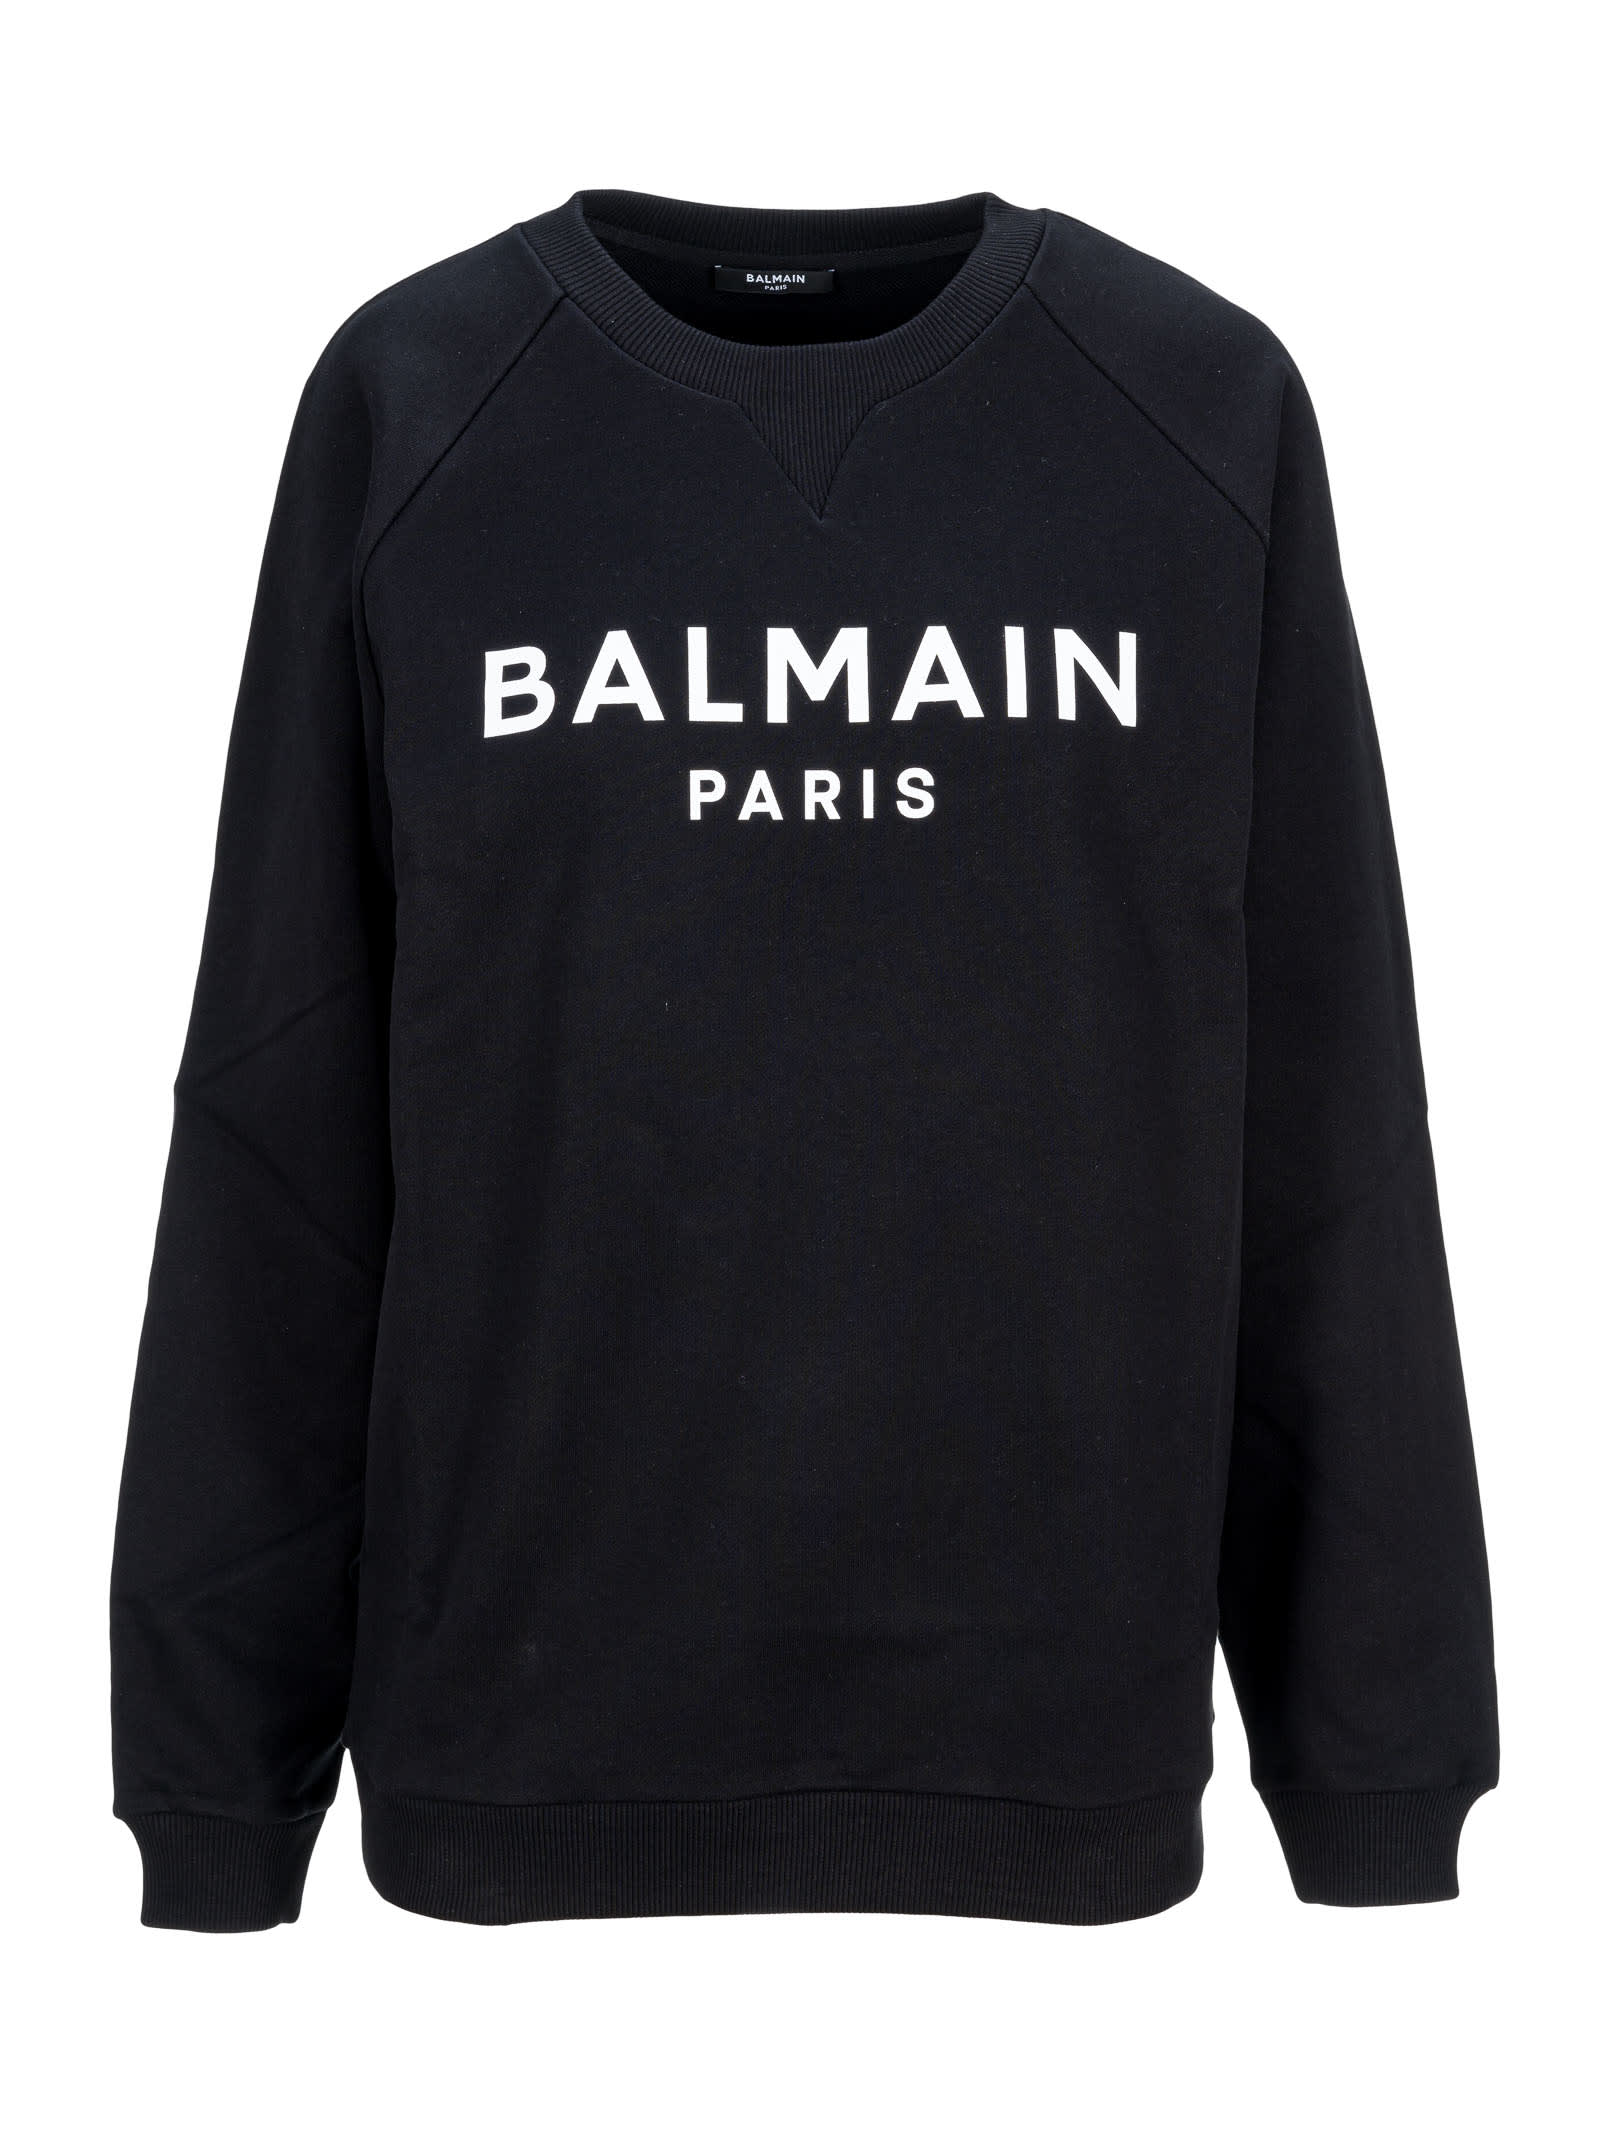 Balmain Cotton Sweatshirt With Balmain Paris Logo Print